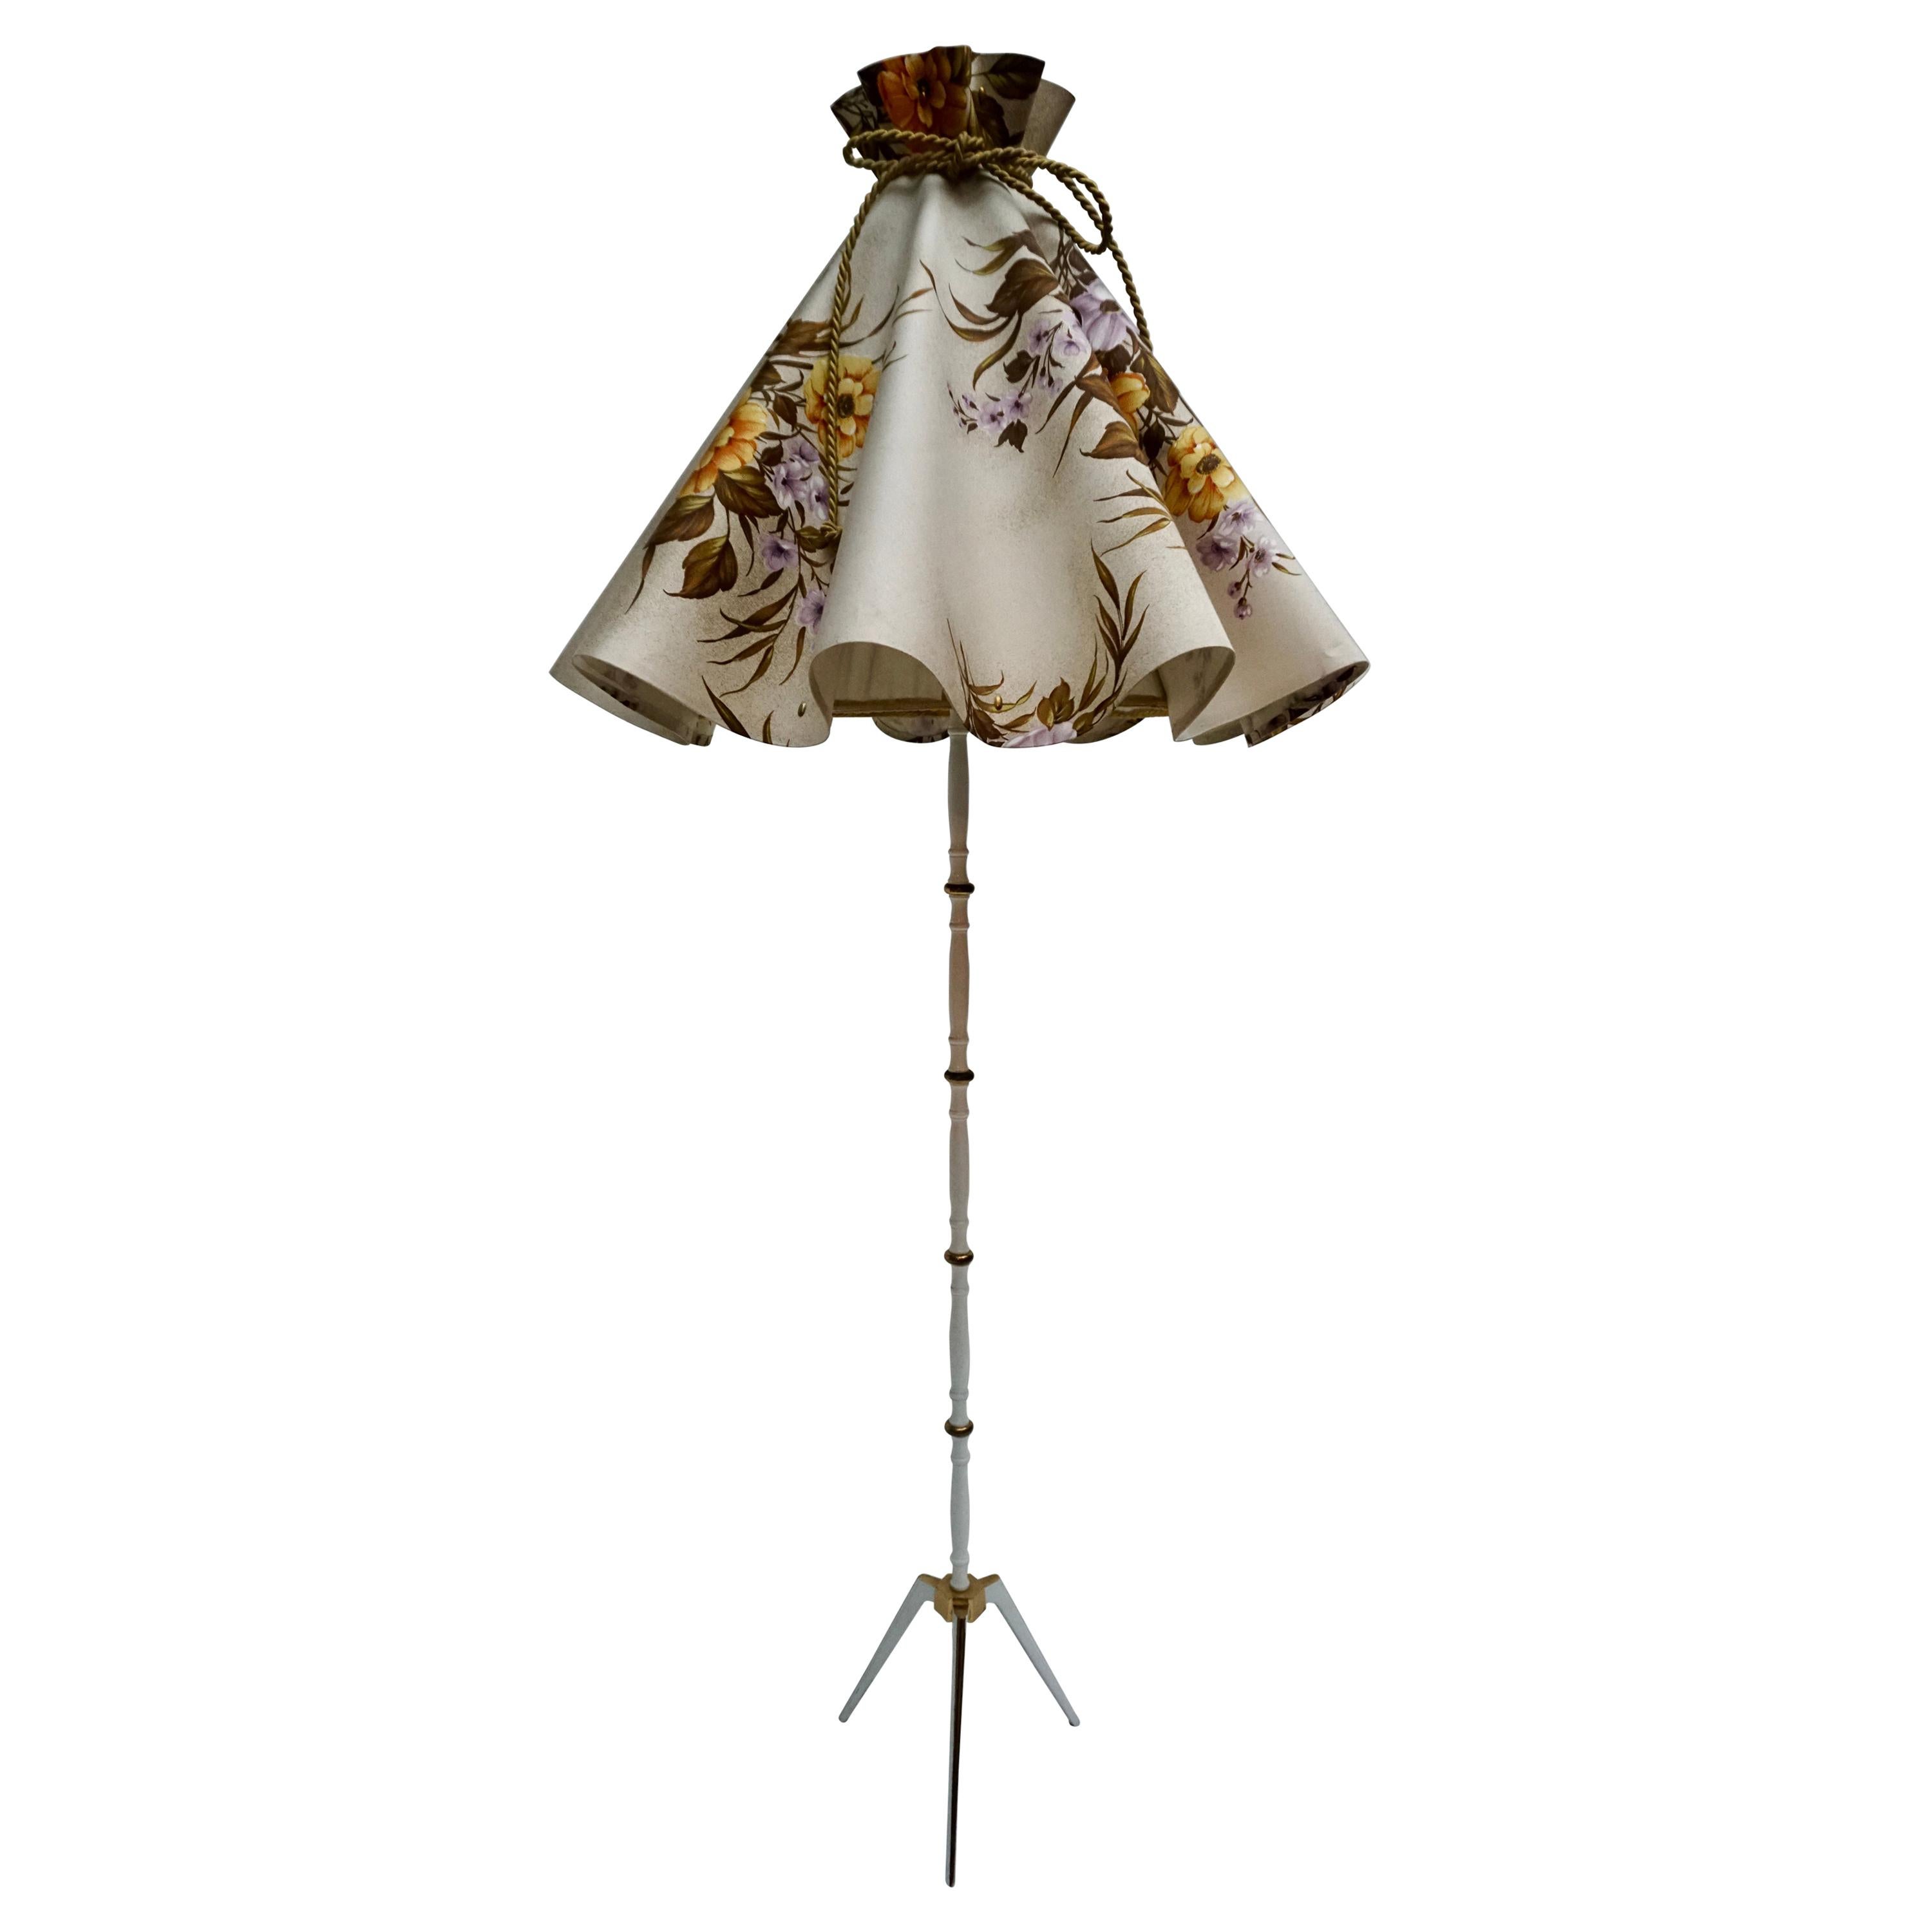 Midcentury Brass Floor Lamp, Flower Shade, Italy